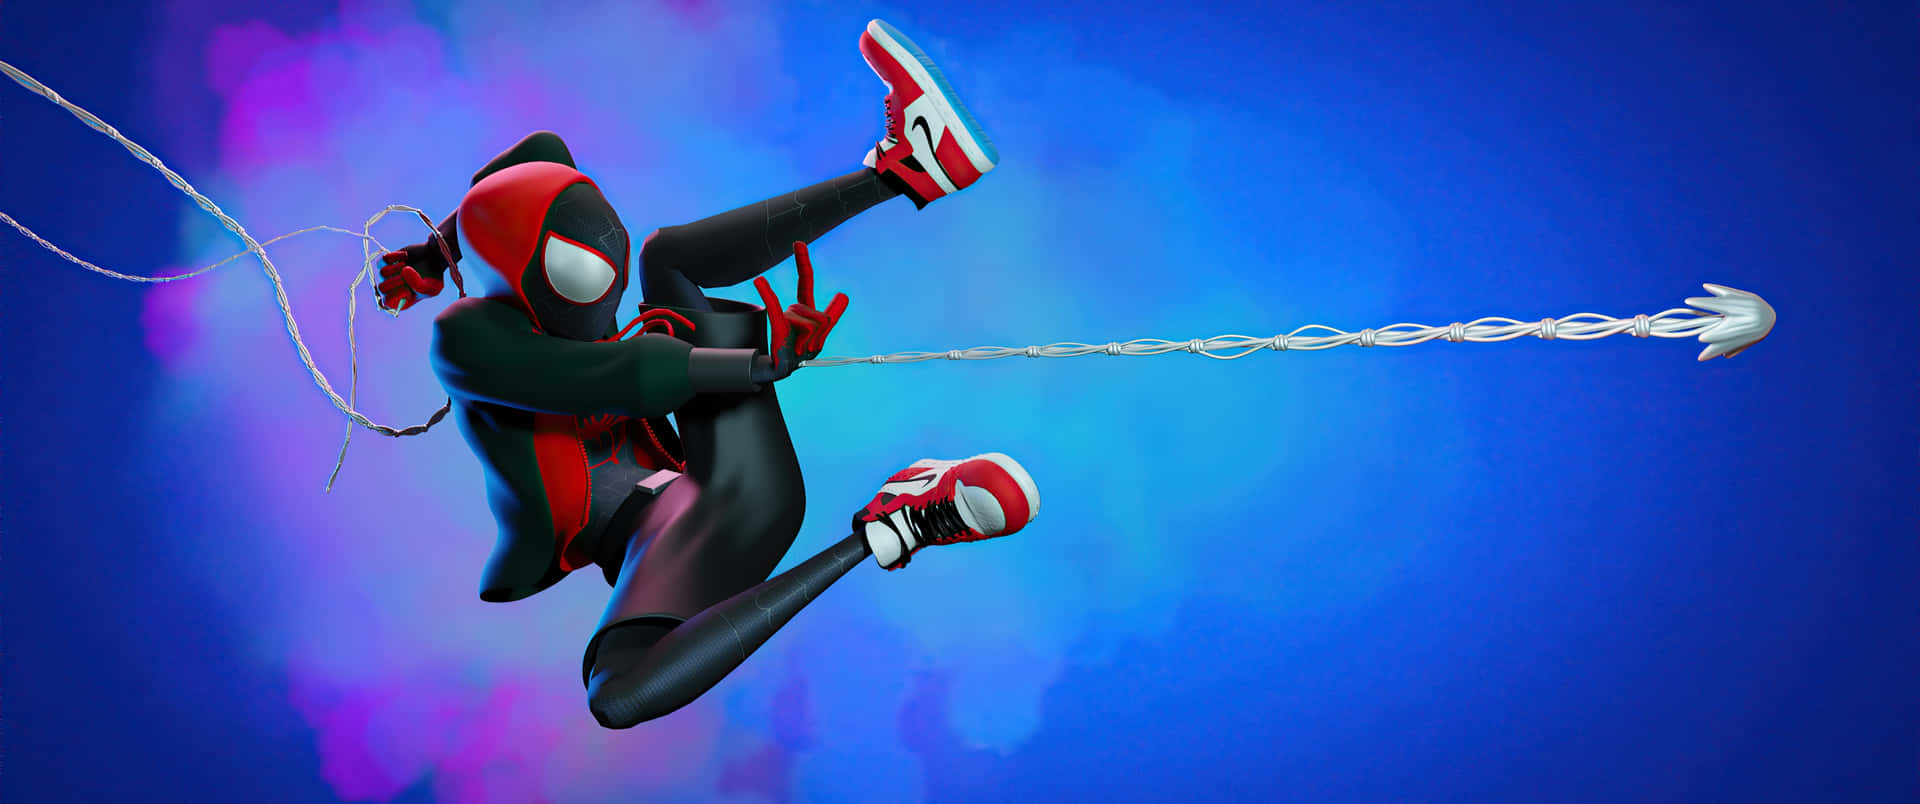 Spider-man Swinging through the City Nightscape Wallpaper